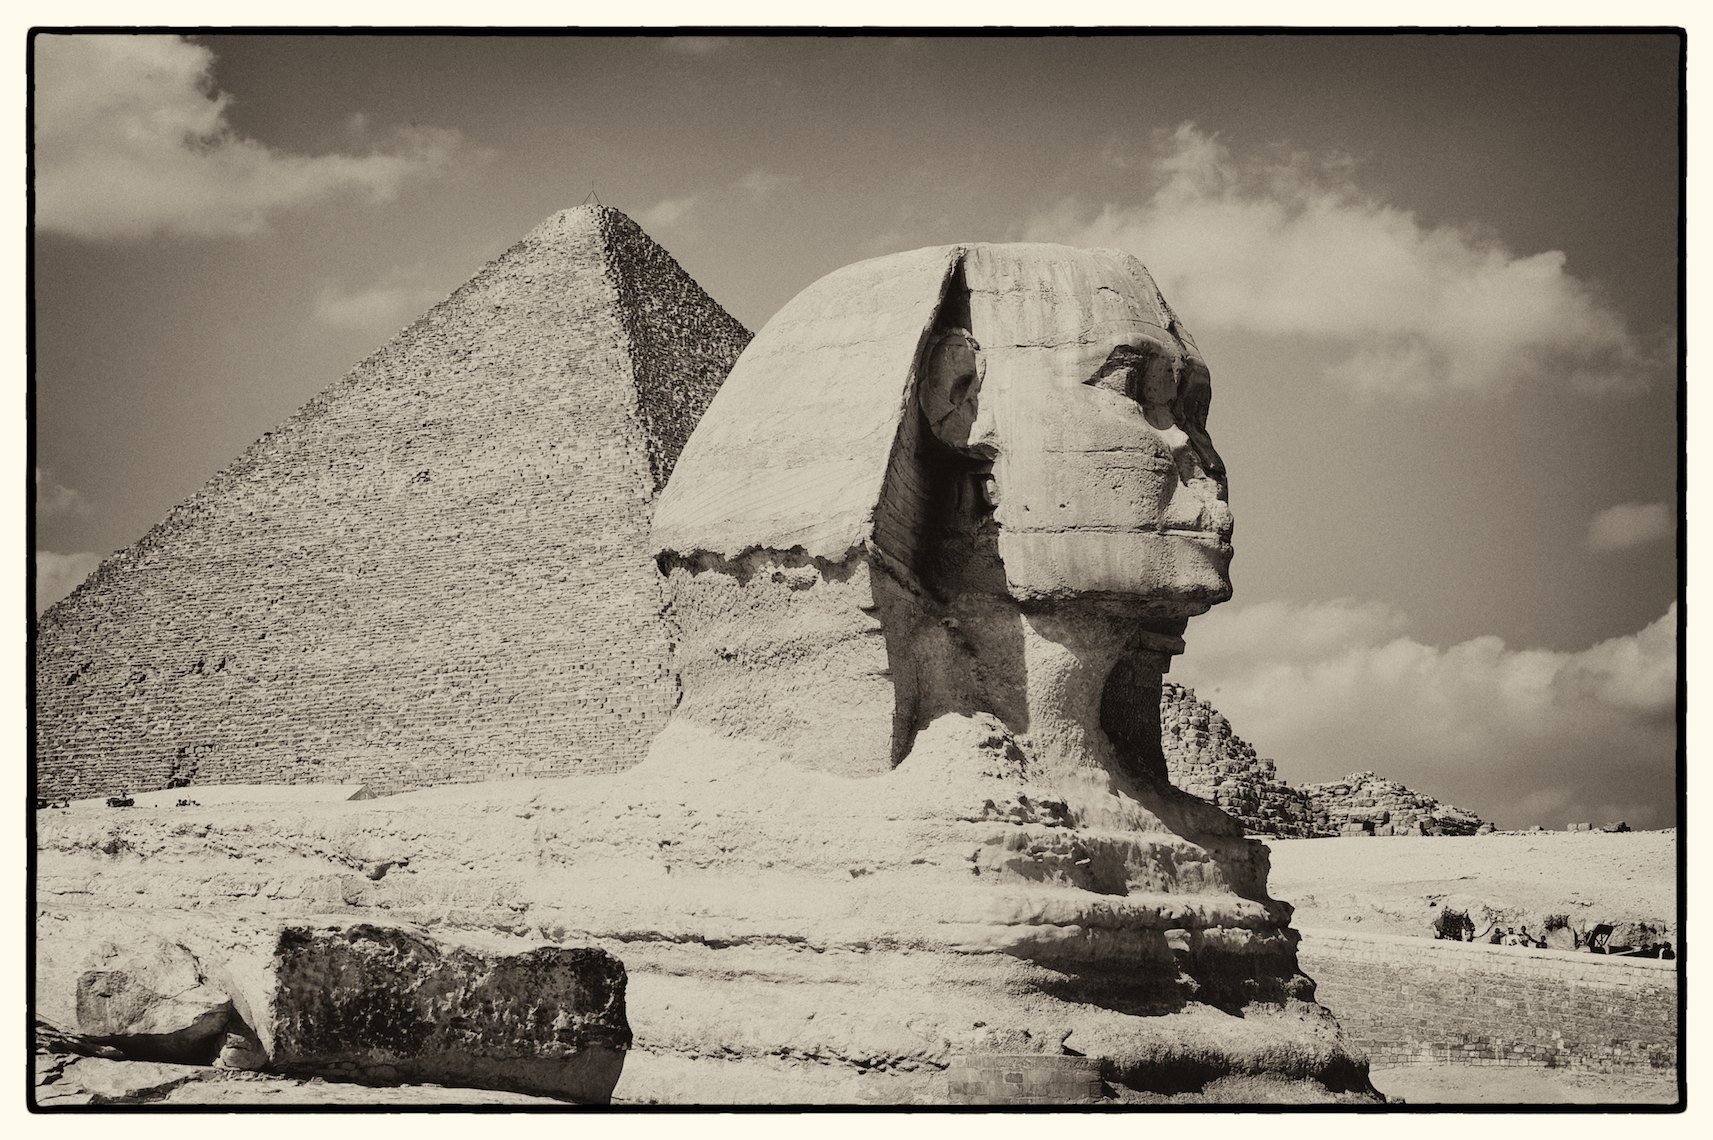 Barth_Egypt_pyramids 007.jpg